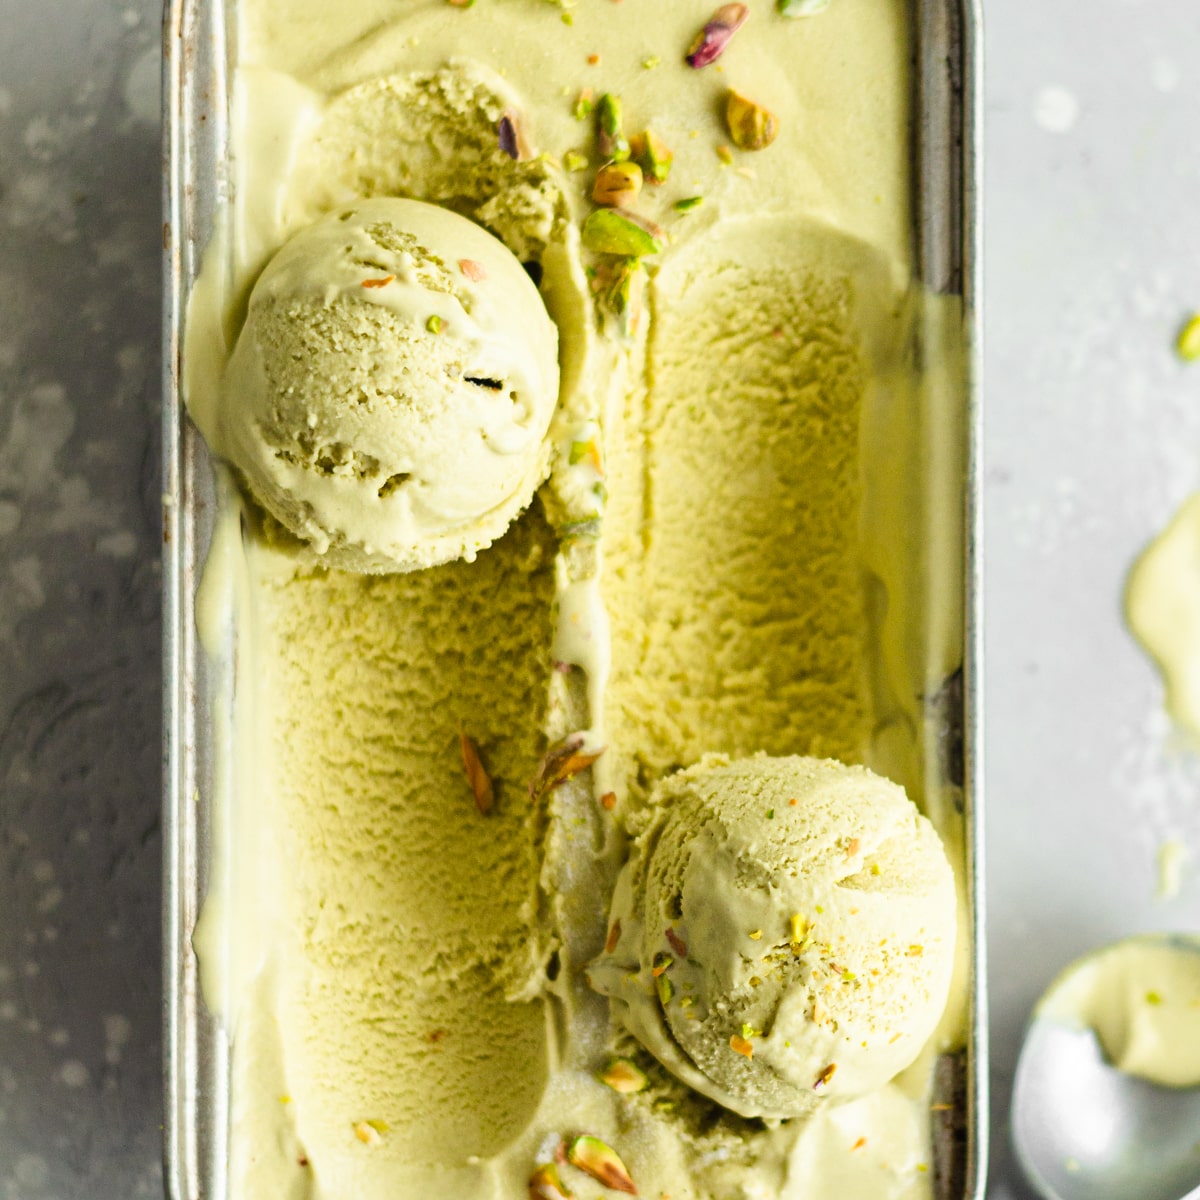 Best Vegan Pistachio Ice Cream • It Doesn't Taste Like Chicken